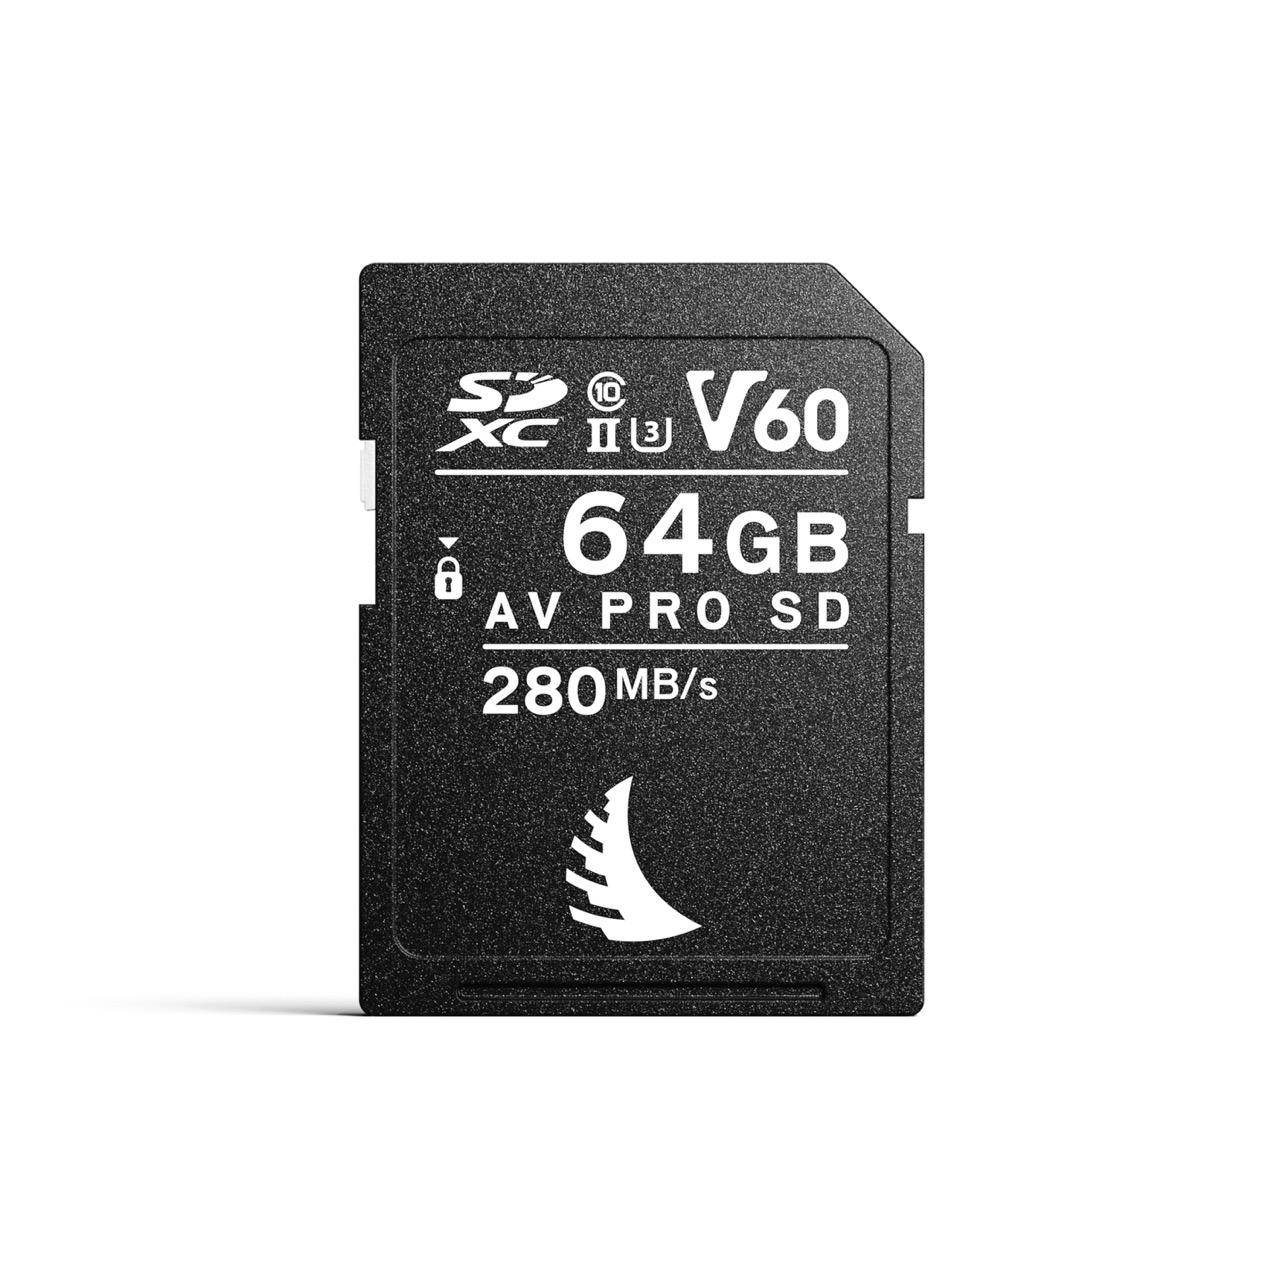 Angelbird AV PRO SD V60 MK2 64GB Speicherkarte, Frontal